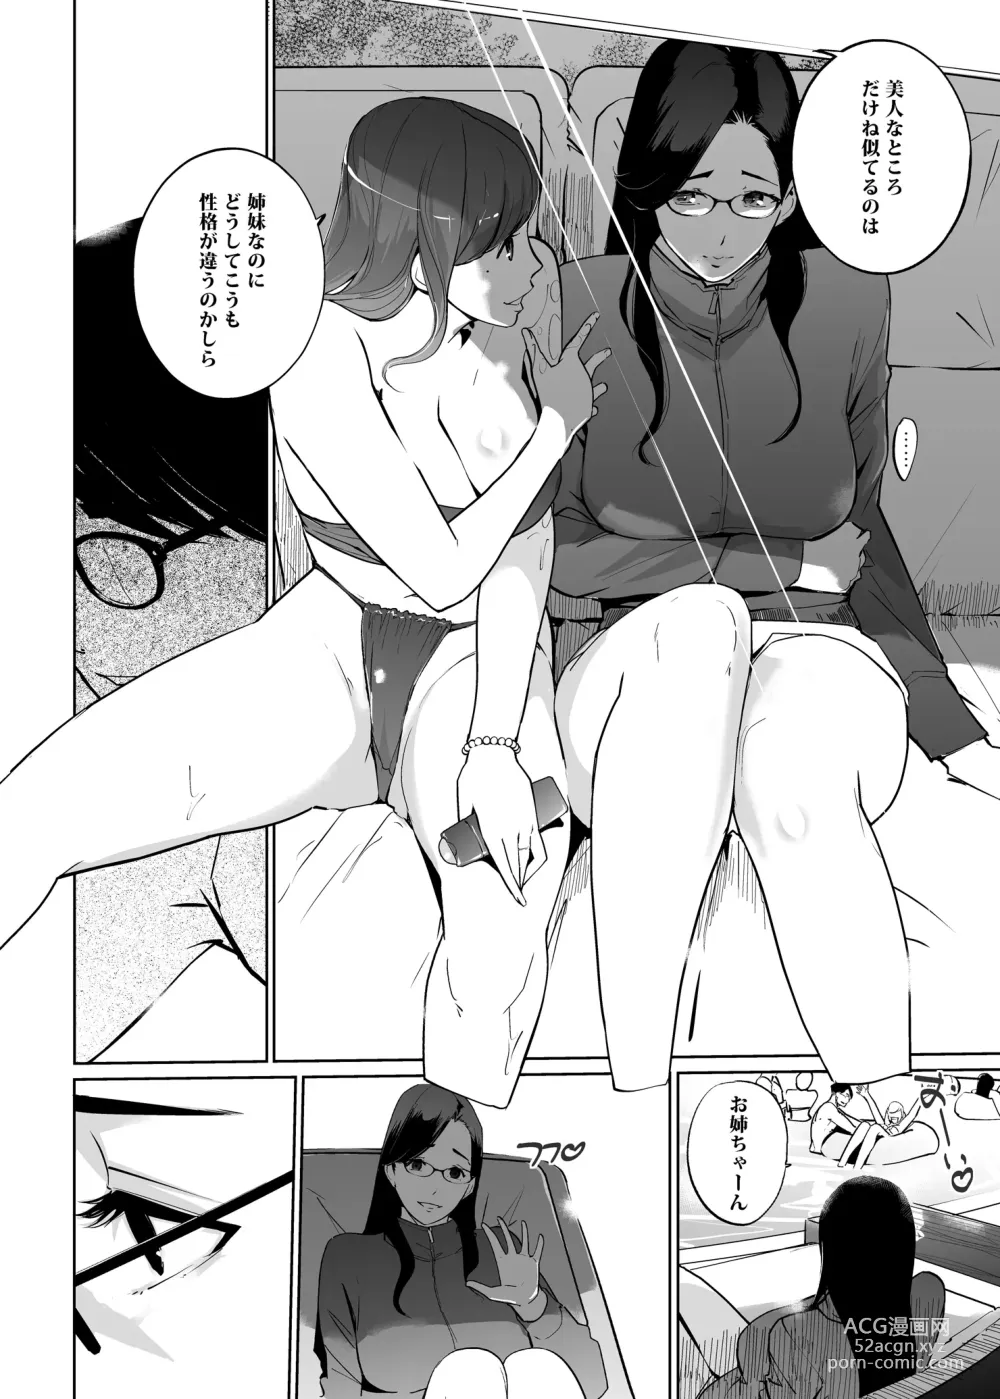 Page 6 of doujinshi NTR Midnight Pool Season 2 #1